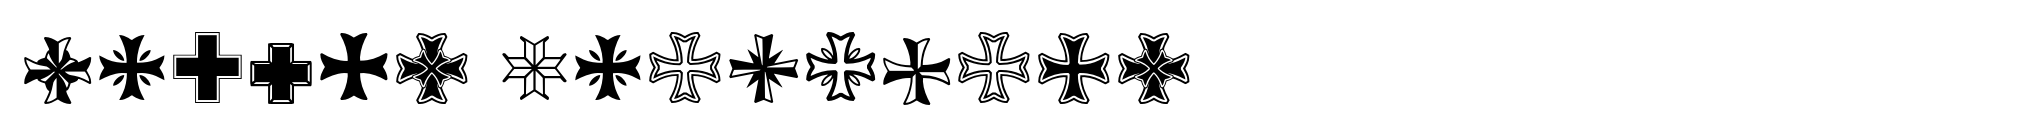 Crucis Ornaments image